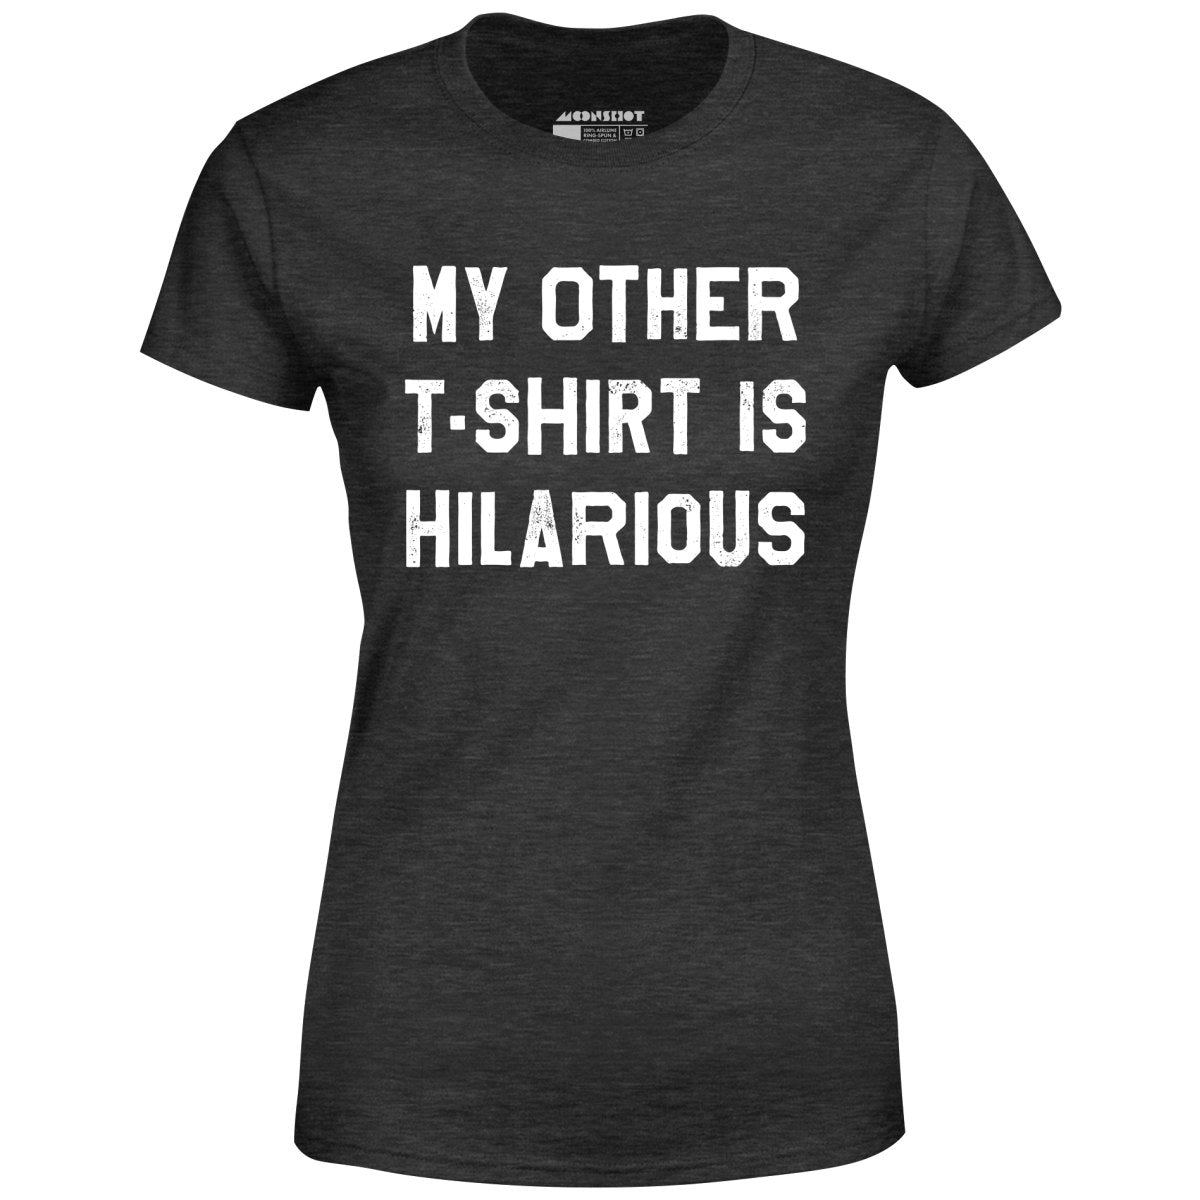 My Other T-Shirt is Hilarious - Women's T-Shirt